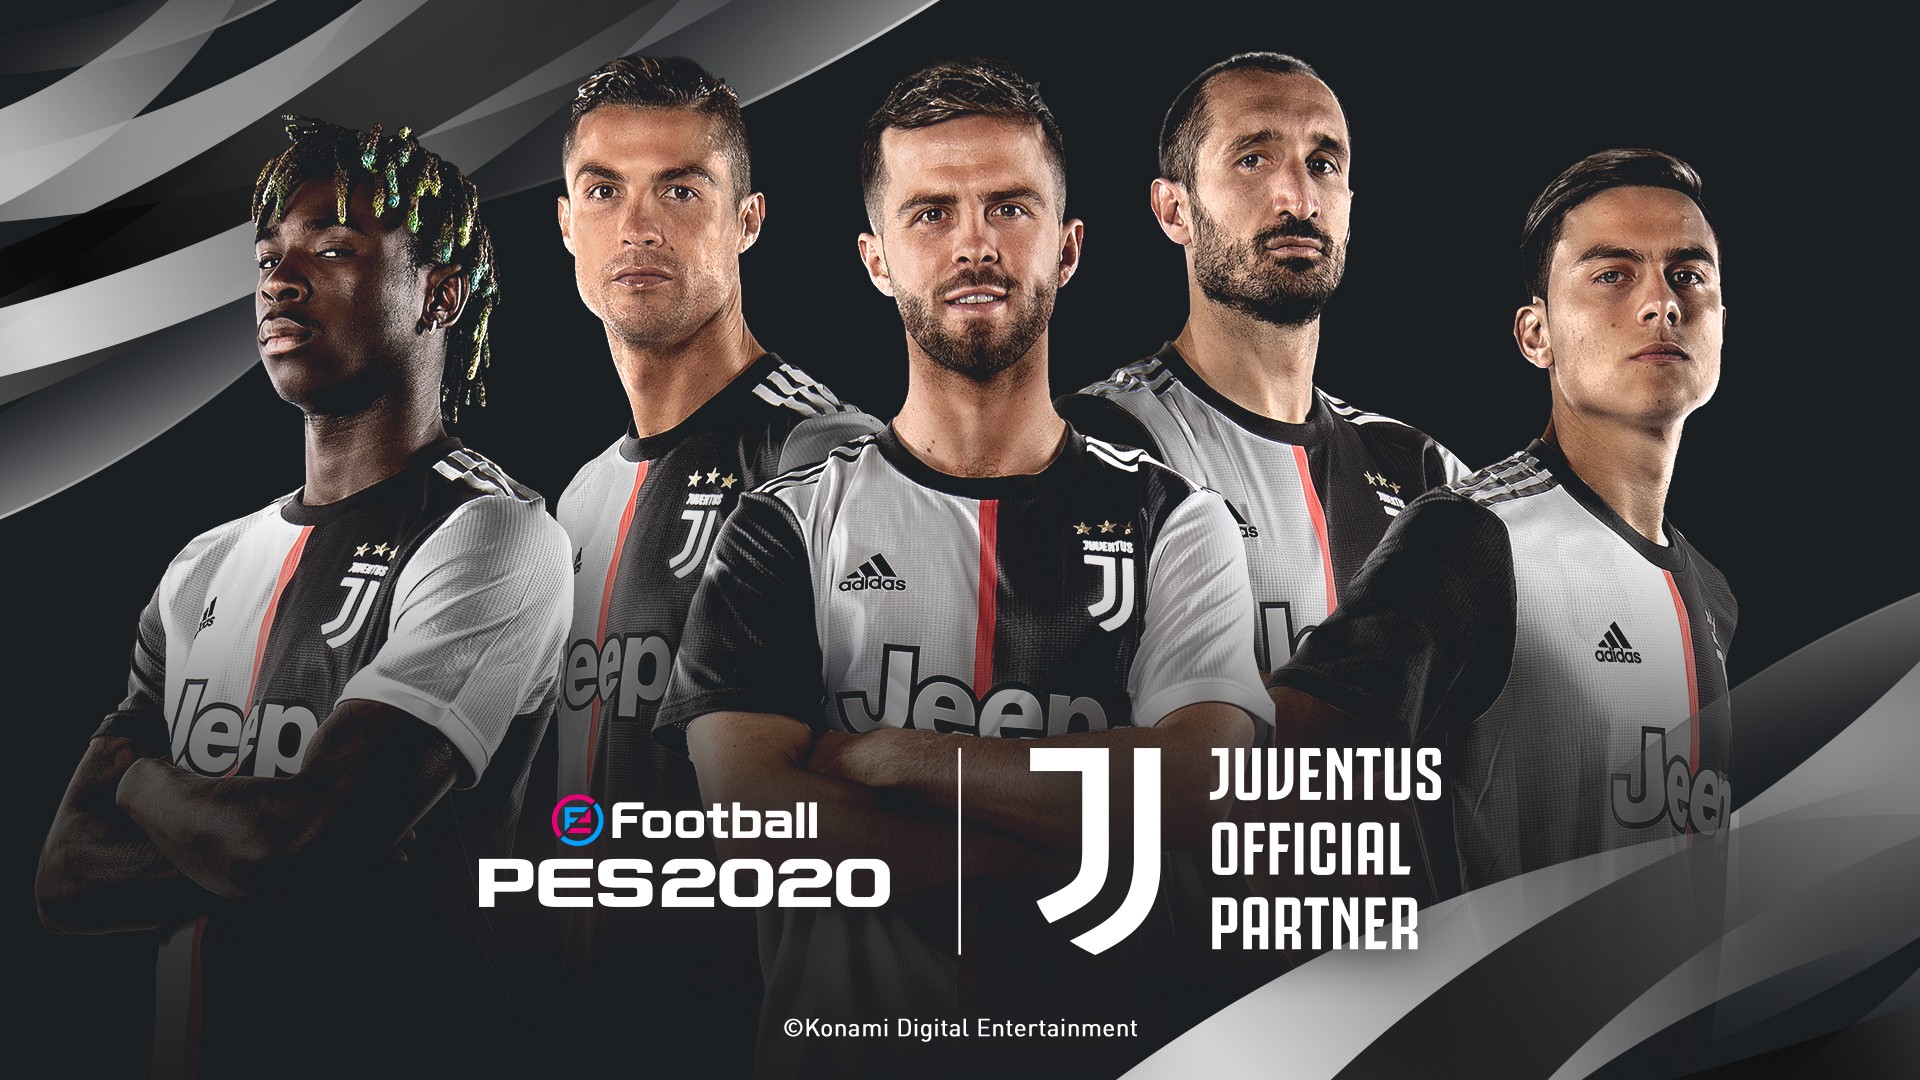 eFootball PES 2020 accoglie la Juventus: su FIFA 20 si chiamerà Piemonte Calcio